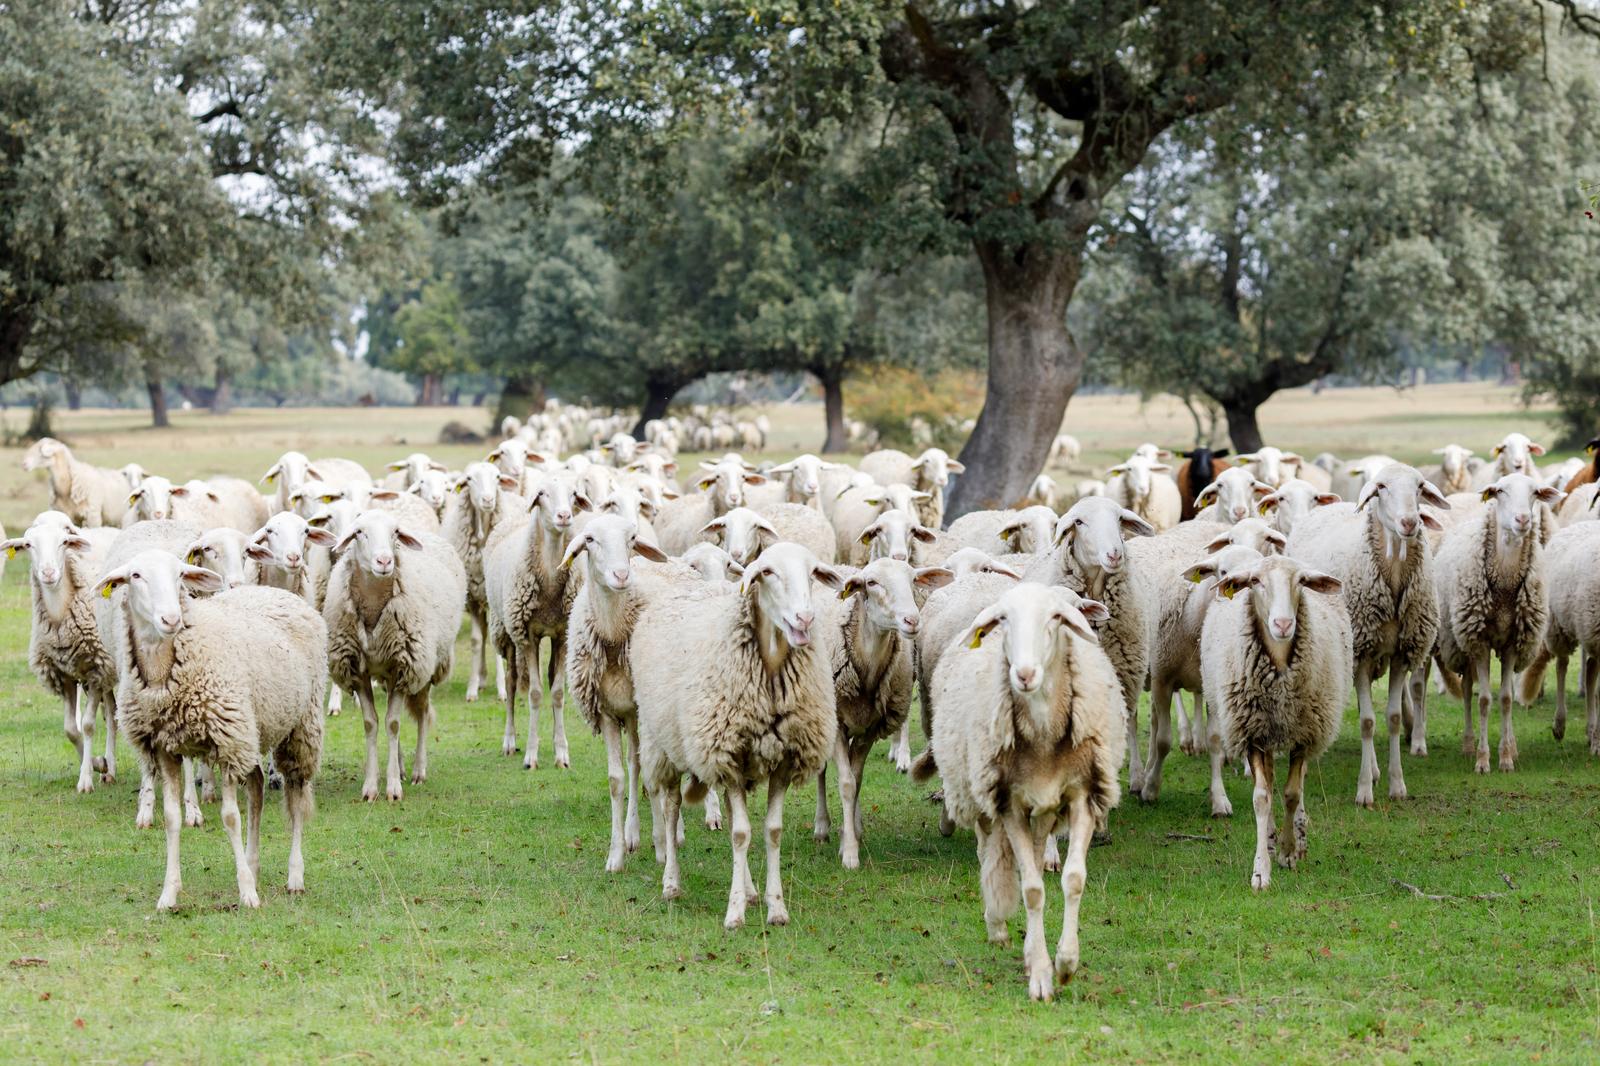 JÕEKÜLA FARM OÜ - Raising of sheep and goats in Pärnu